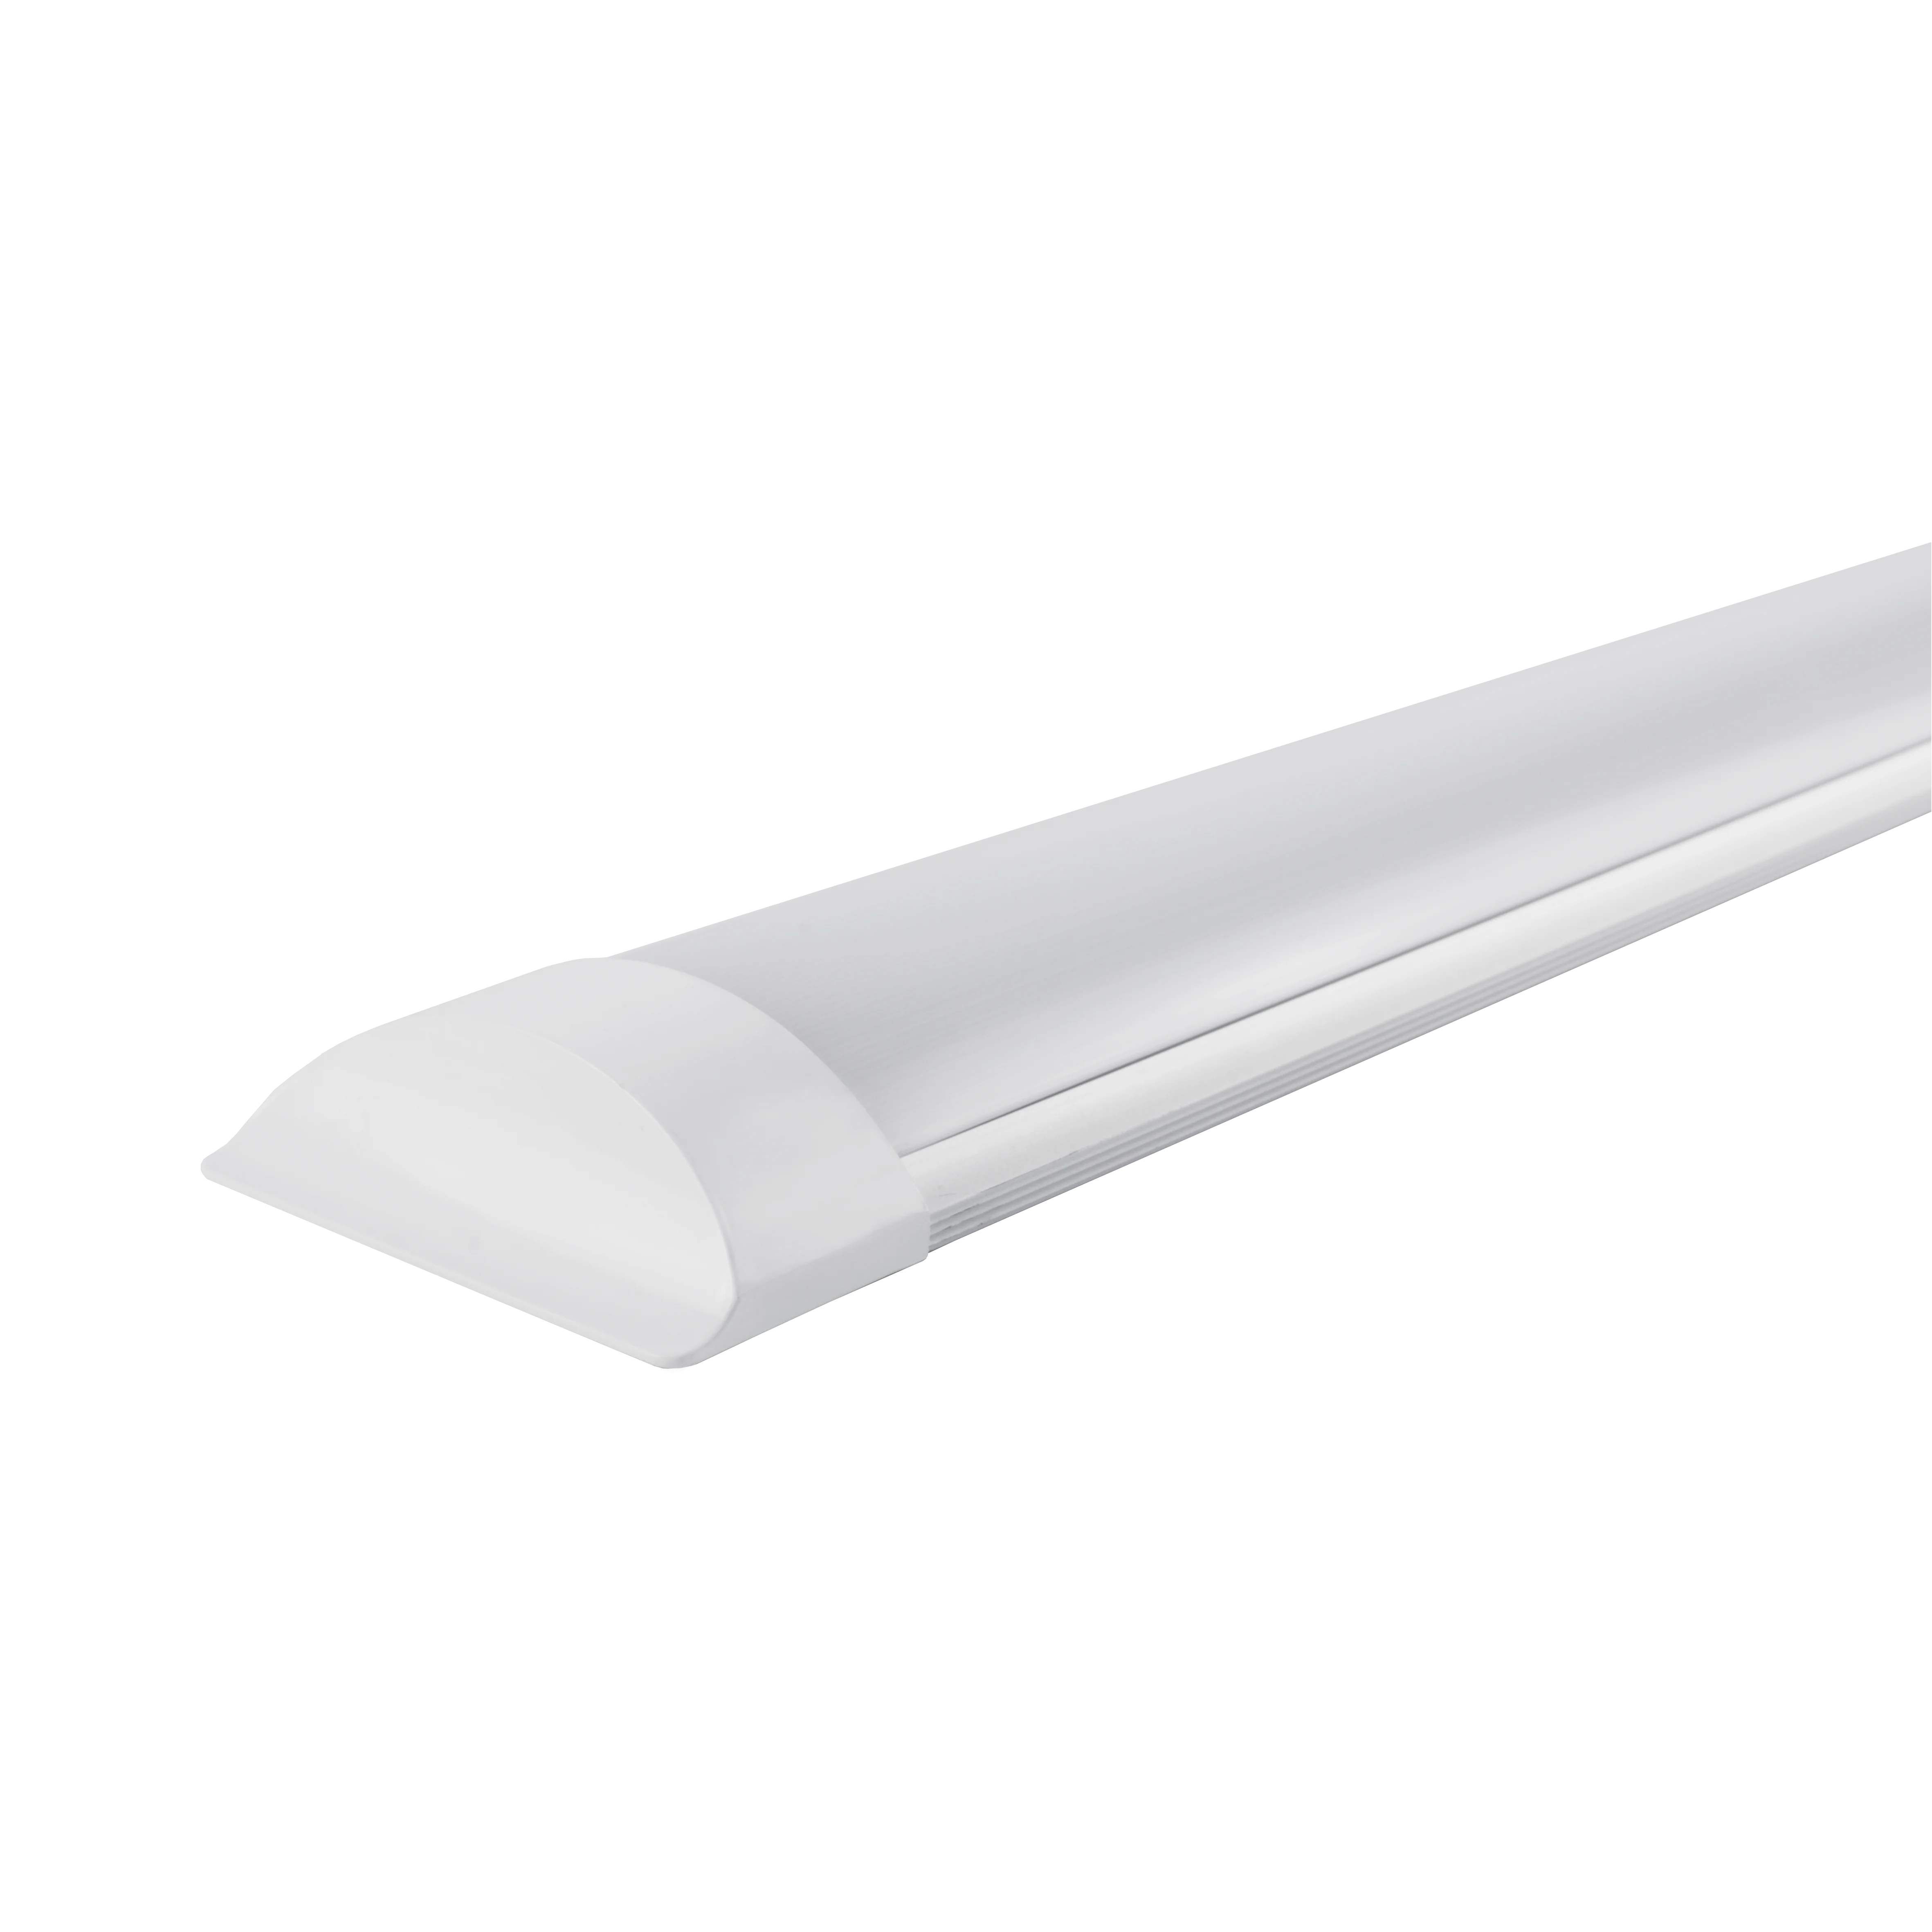 

LED Batten Light 4ft(120cm), 36W Integrated Linear Tube, Ceiling or Wall Mount for Kitchen,Garage,Workshop,Bathroom,Warehouse